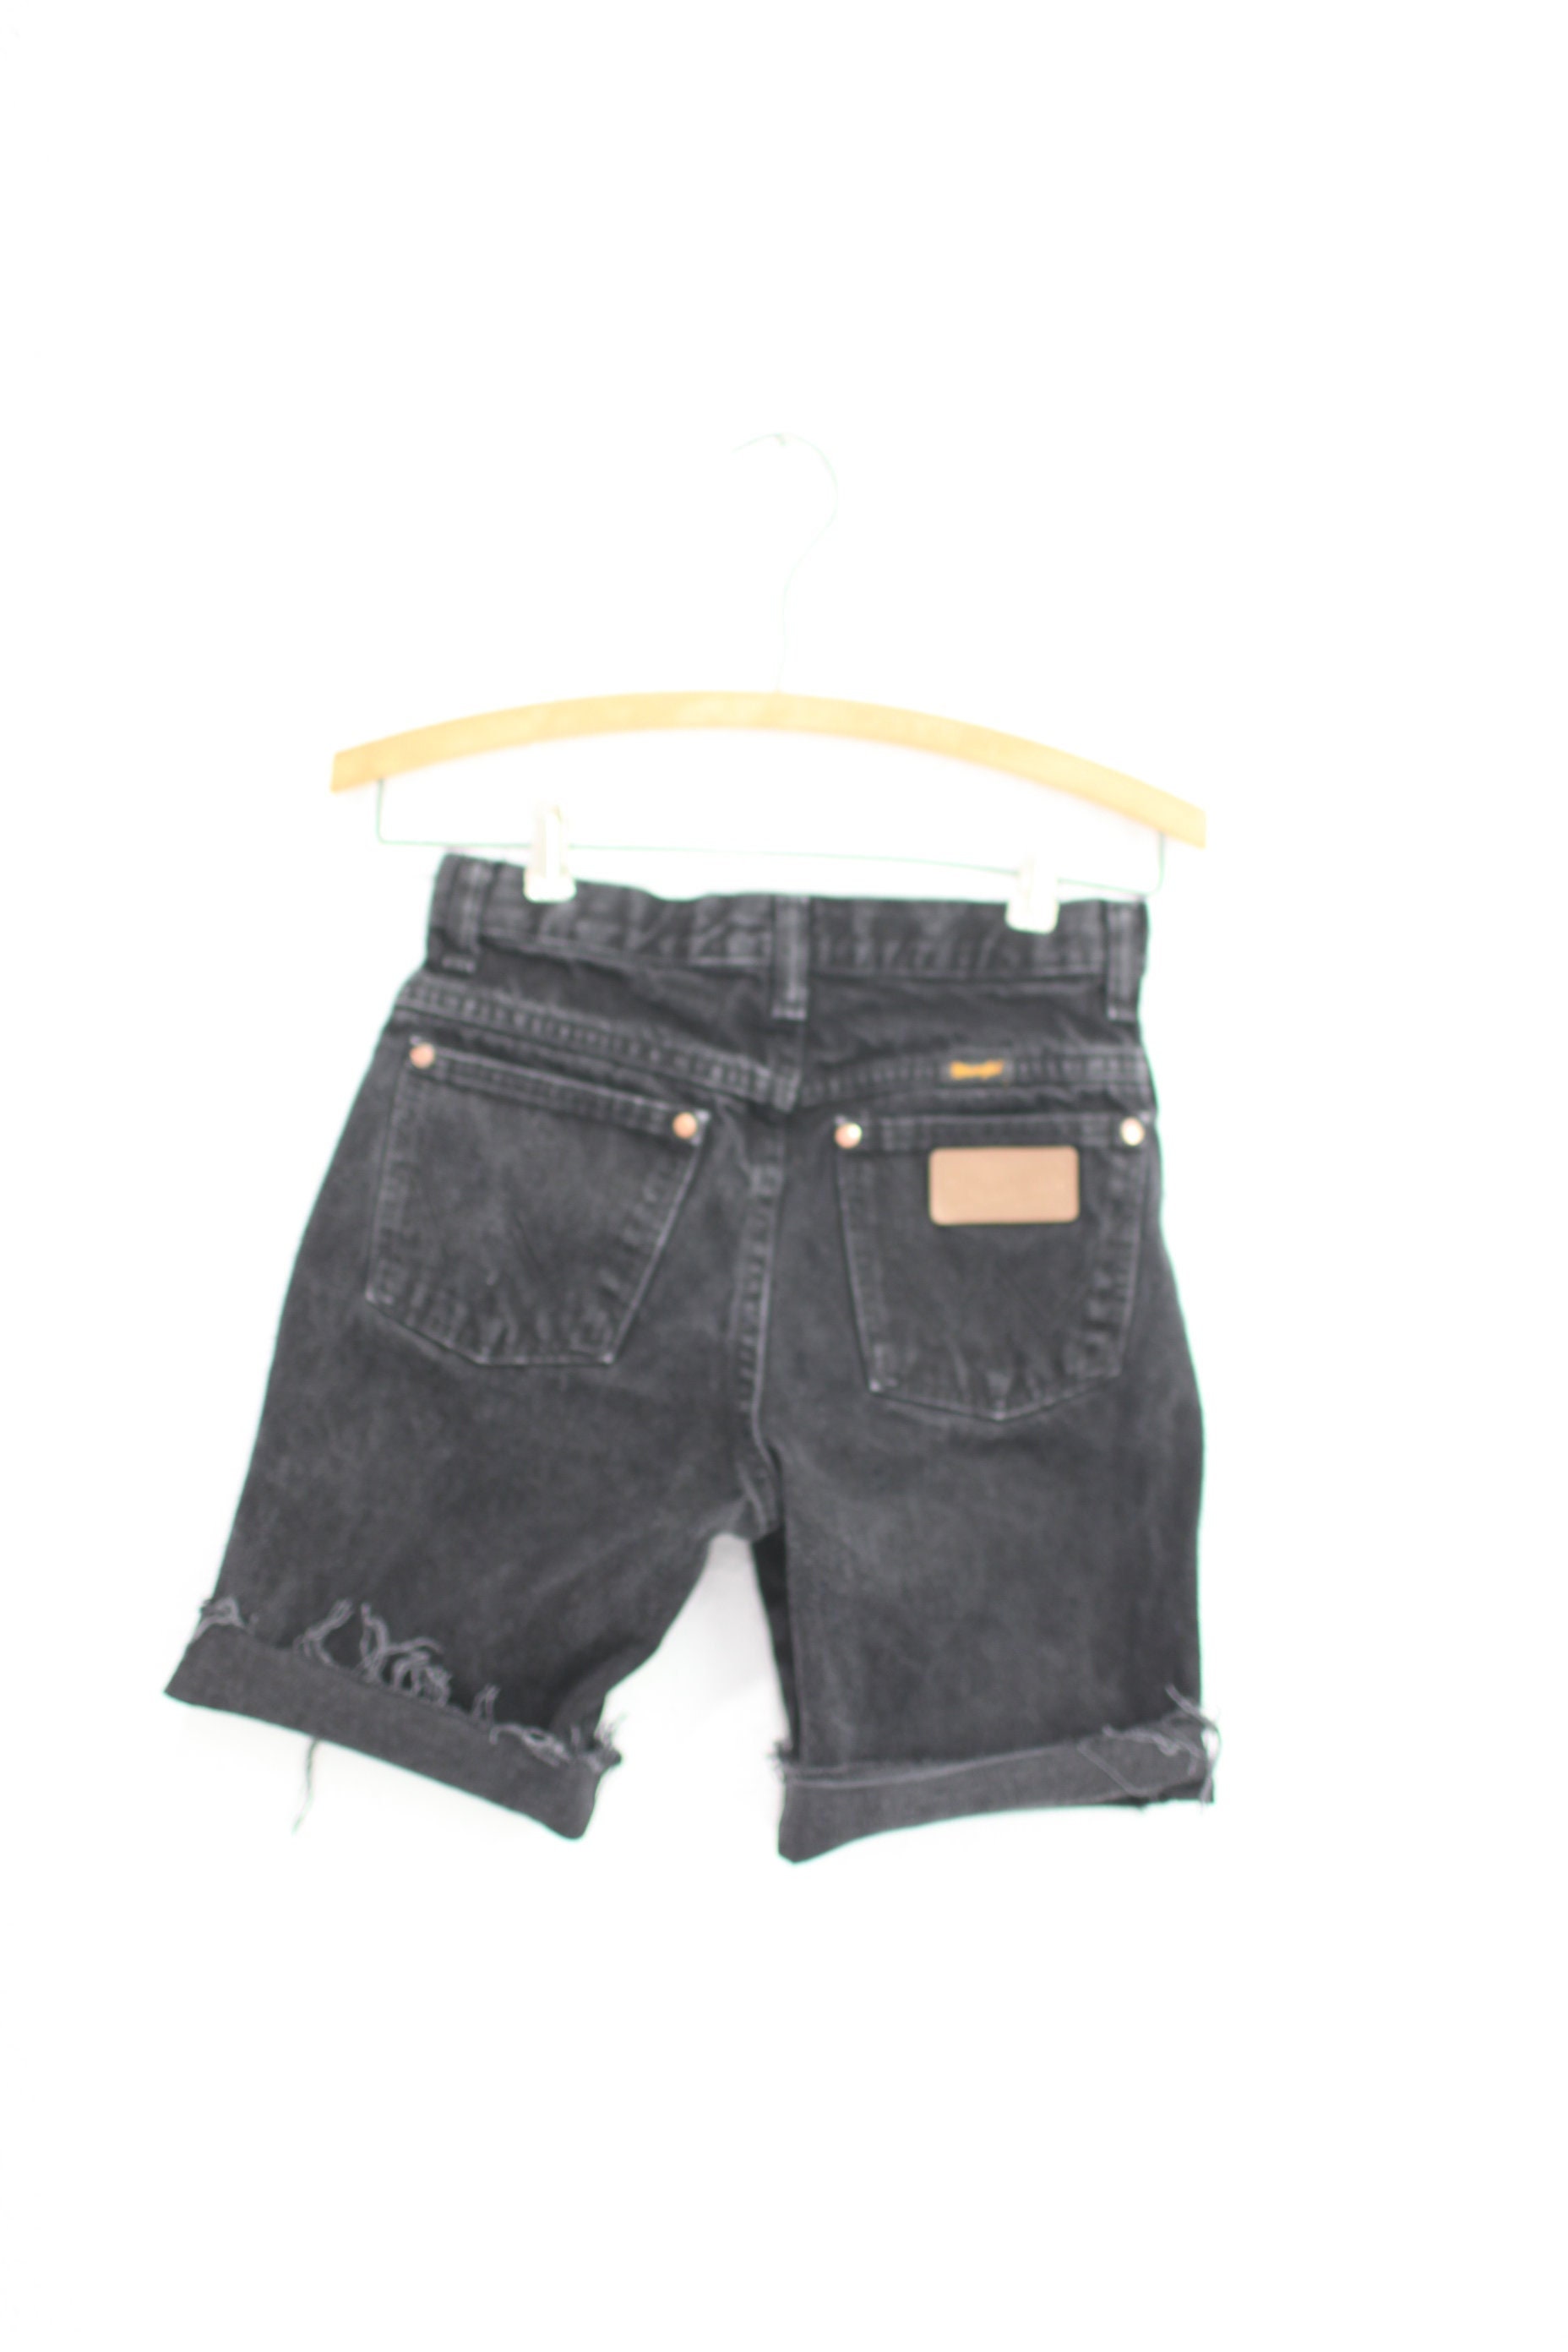 Vintage Wrangler Cut off Black Denim Jean Shorts Kids 12 0255 - Etsy  Australia